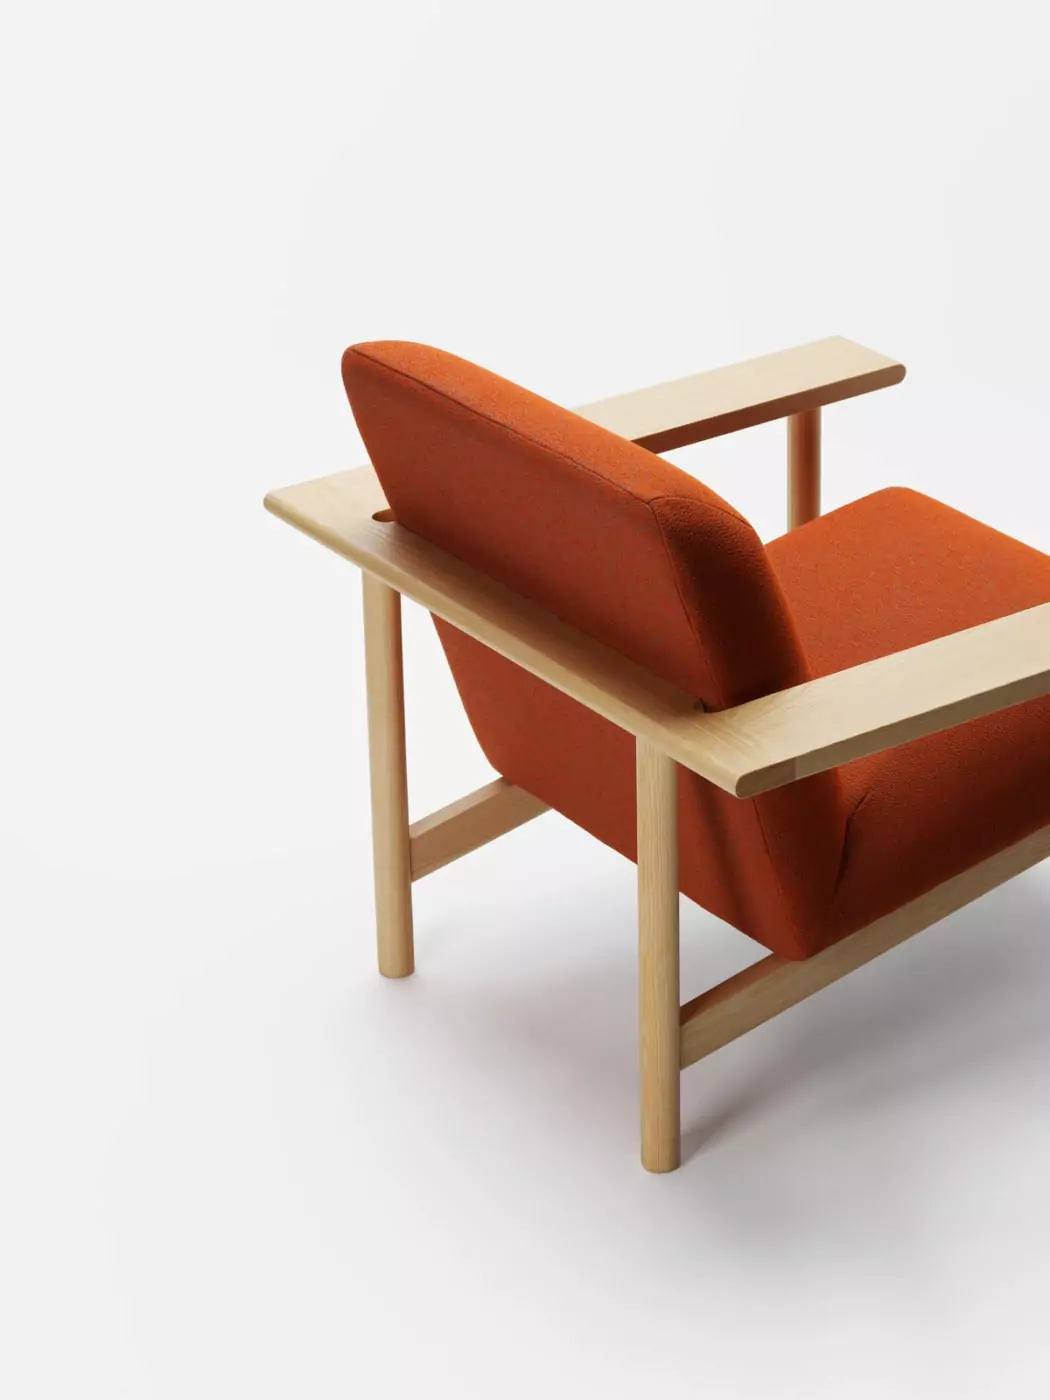 Furniture Design by London Studio Mentsen 16